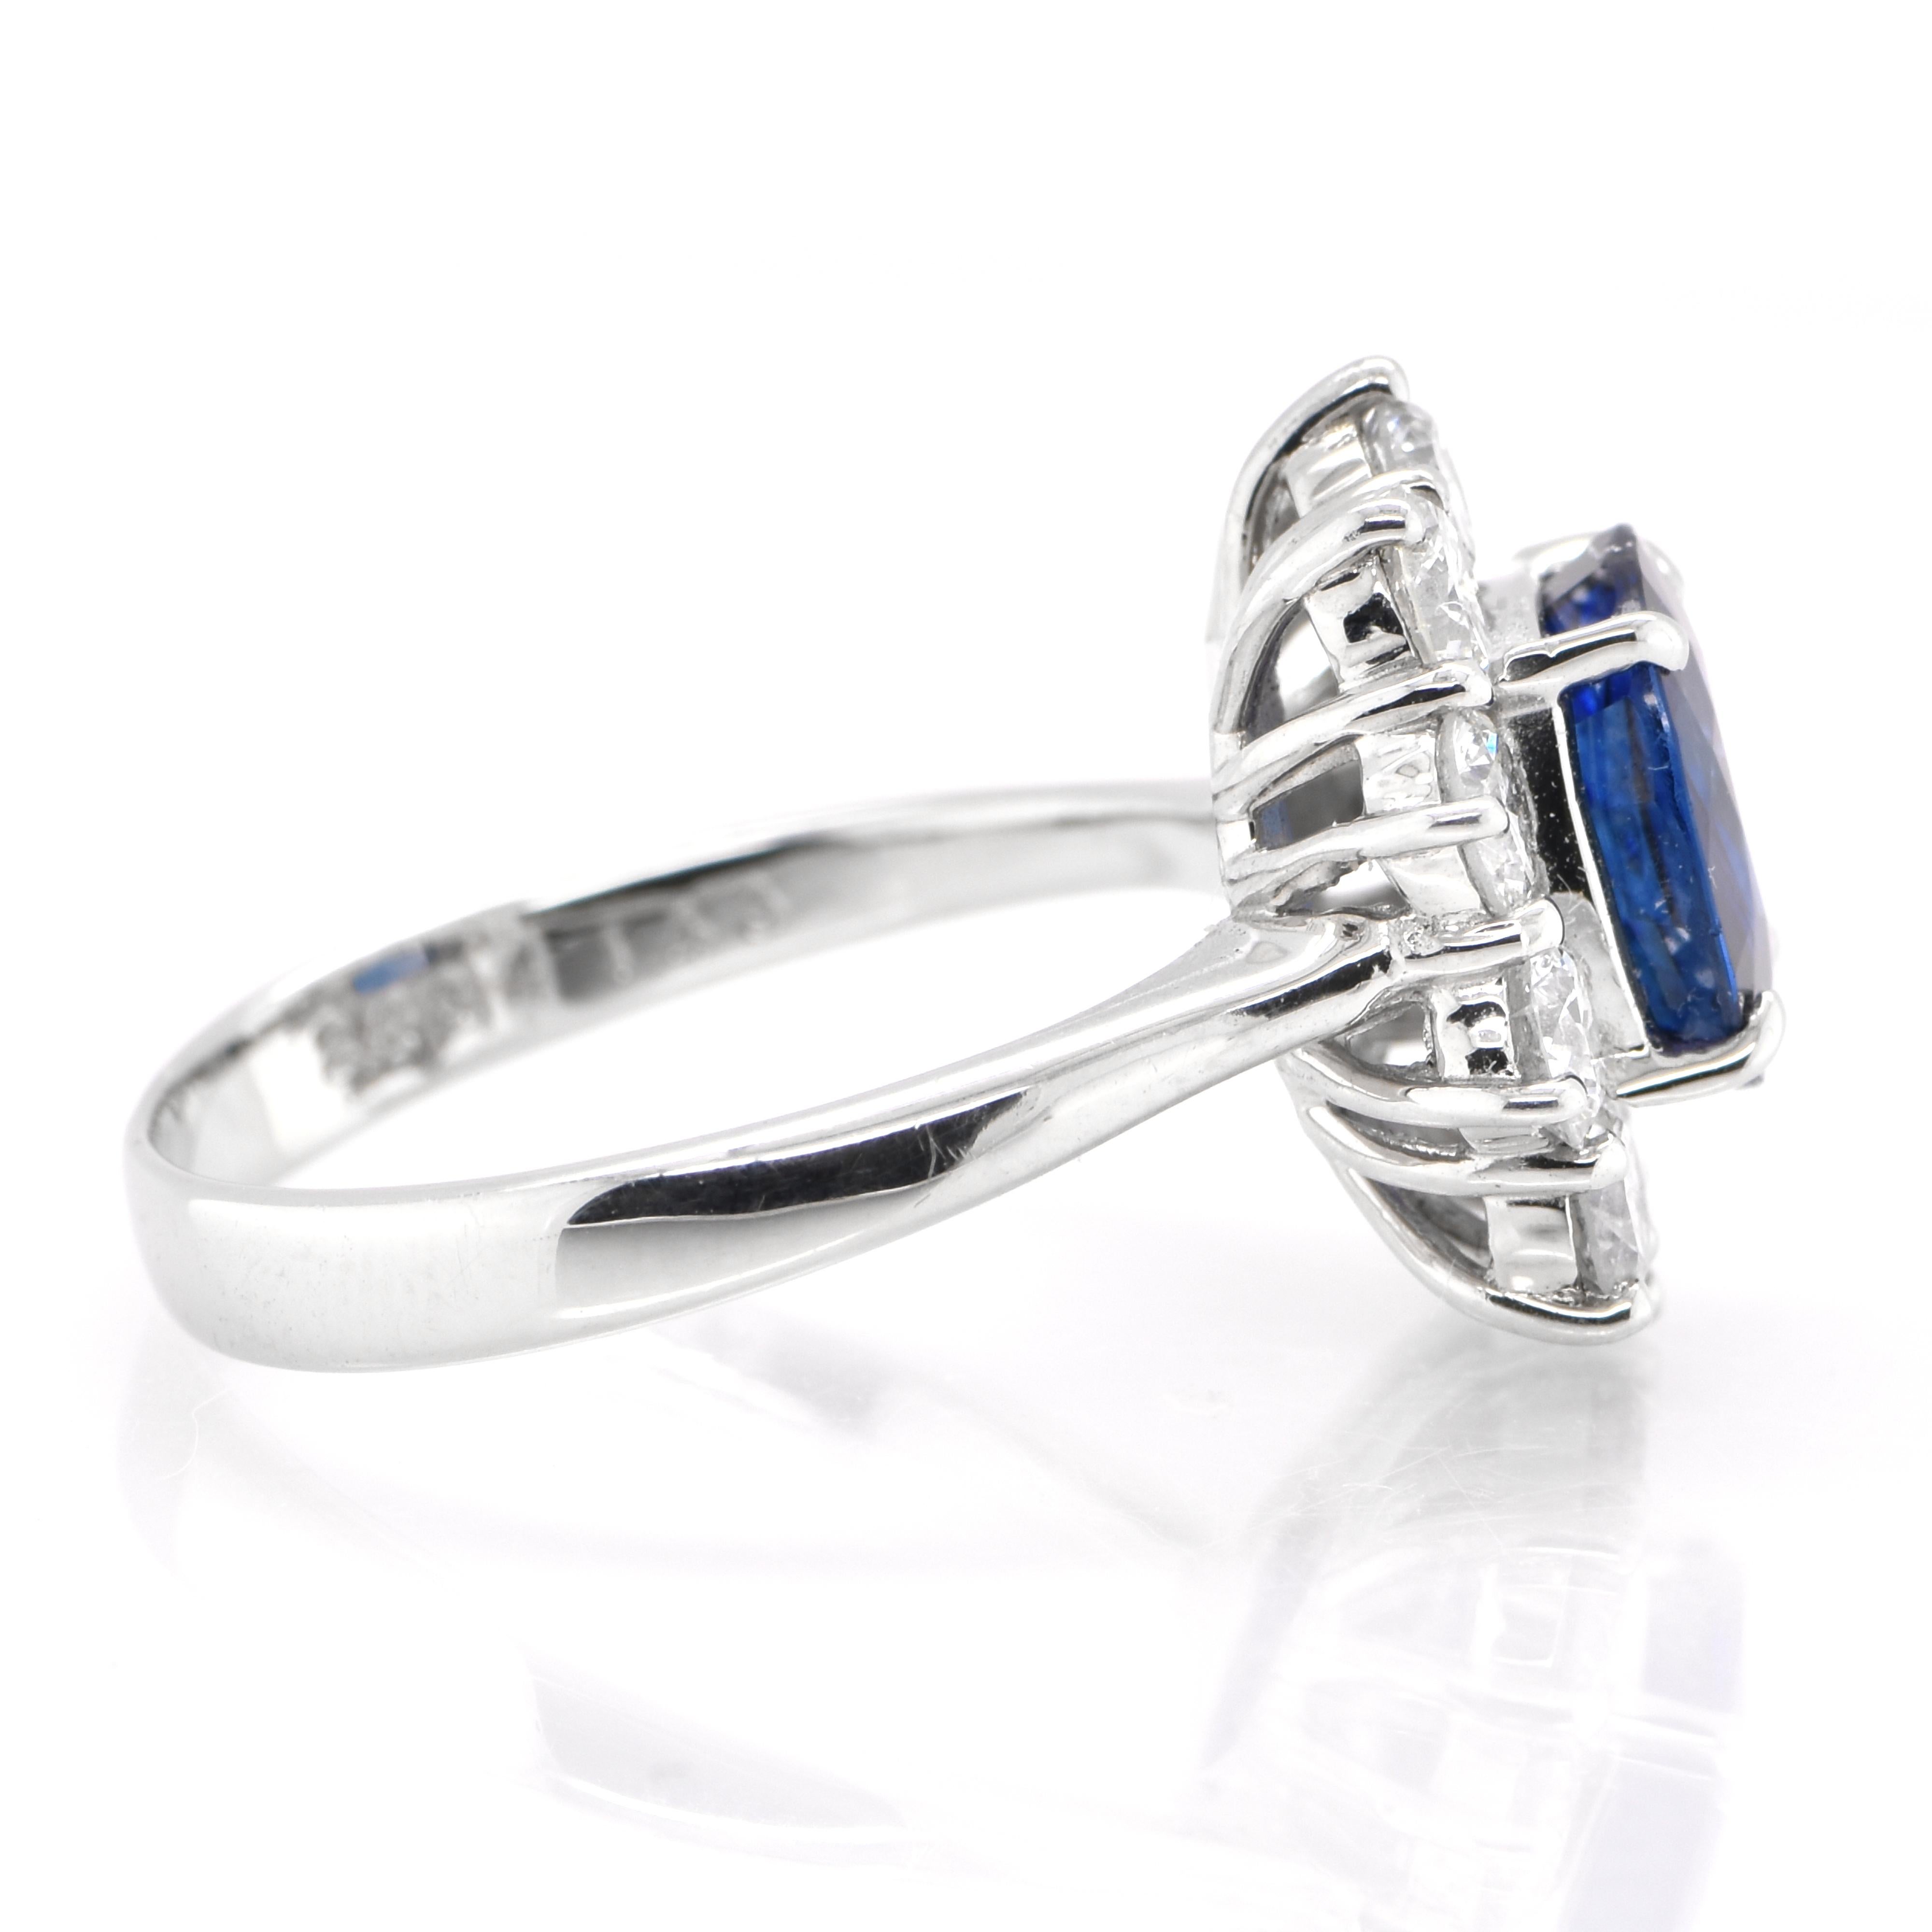 Modern 2.33 Carat Natural Sapphire and Diamond Halo Ring Set in Platinum